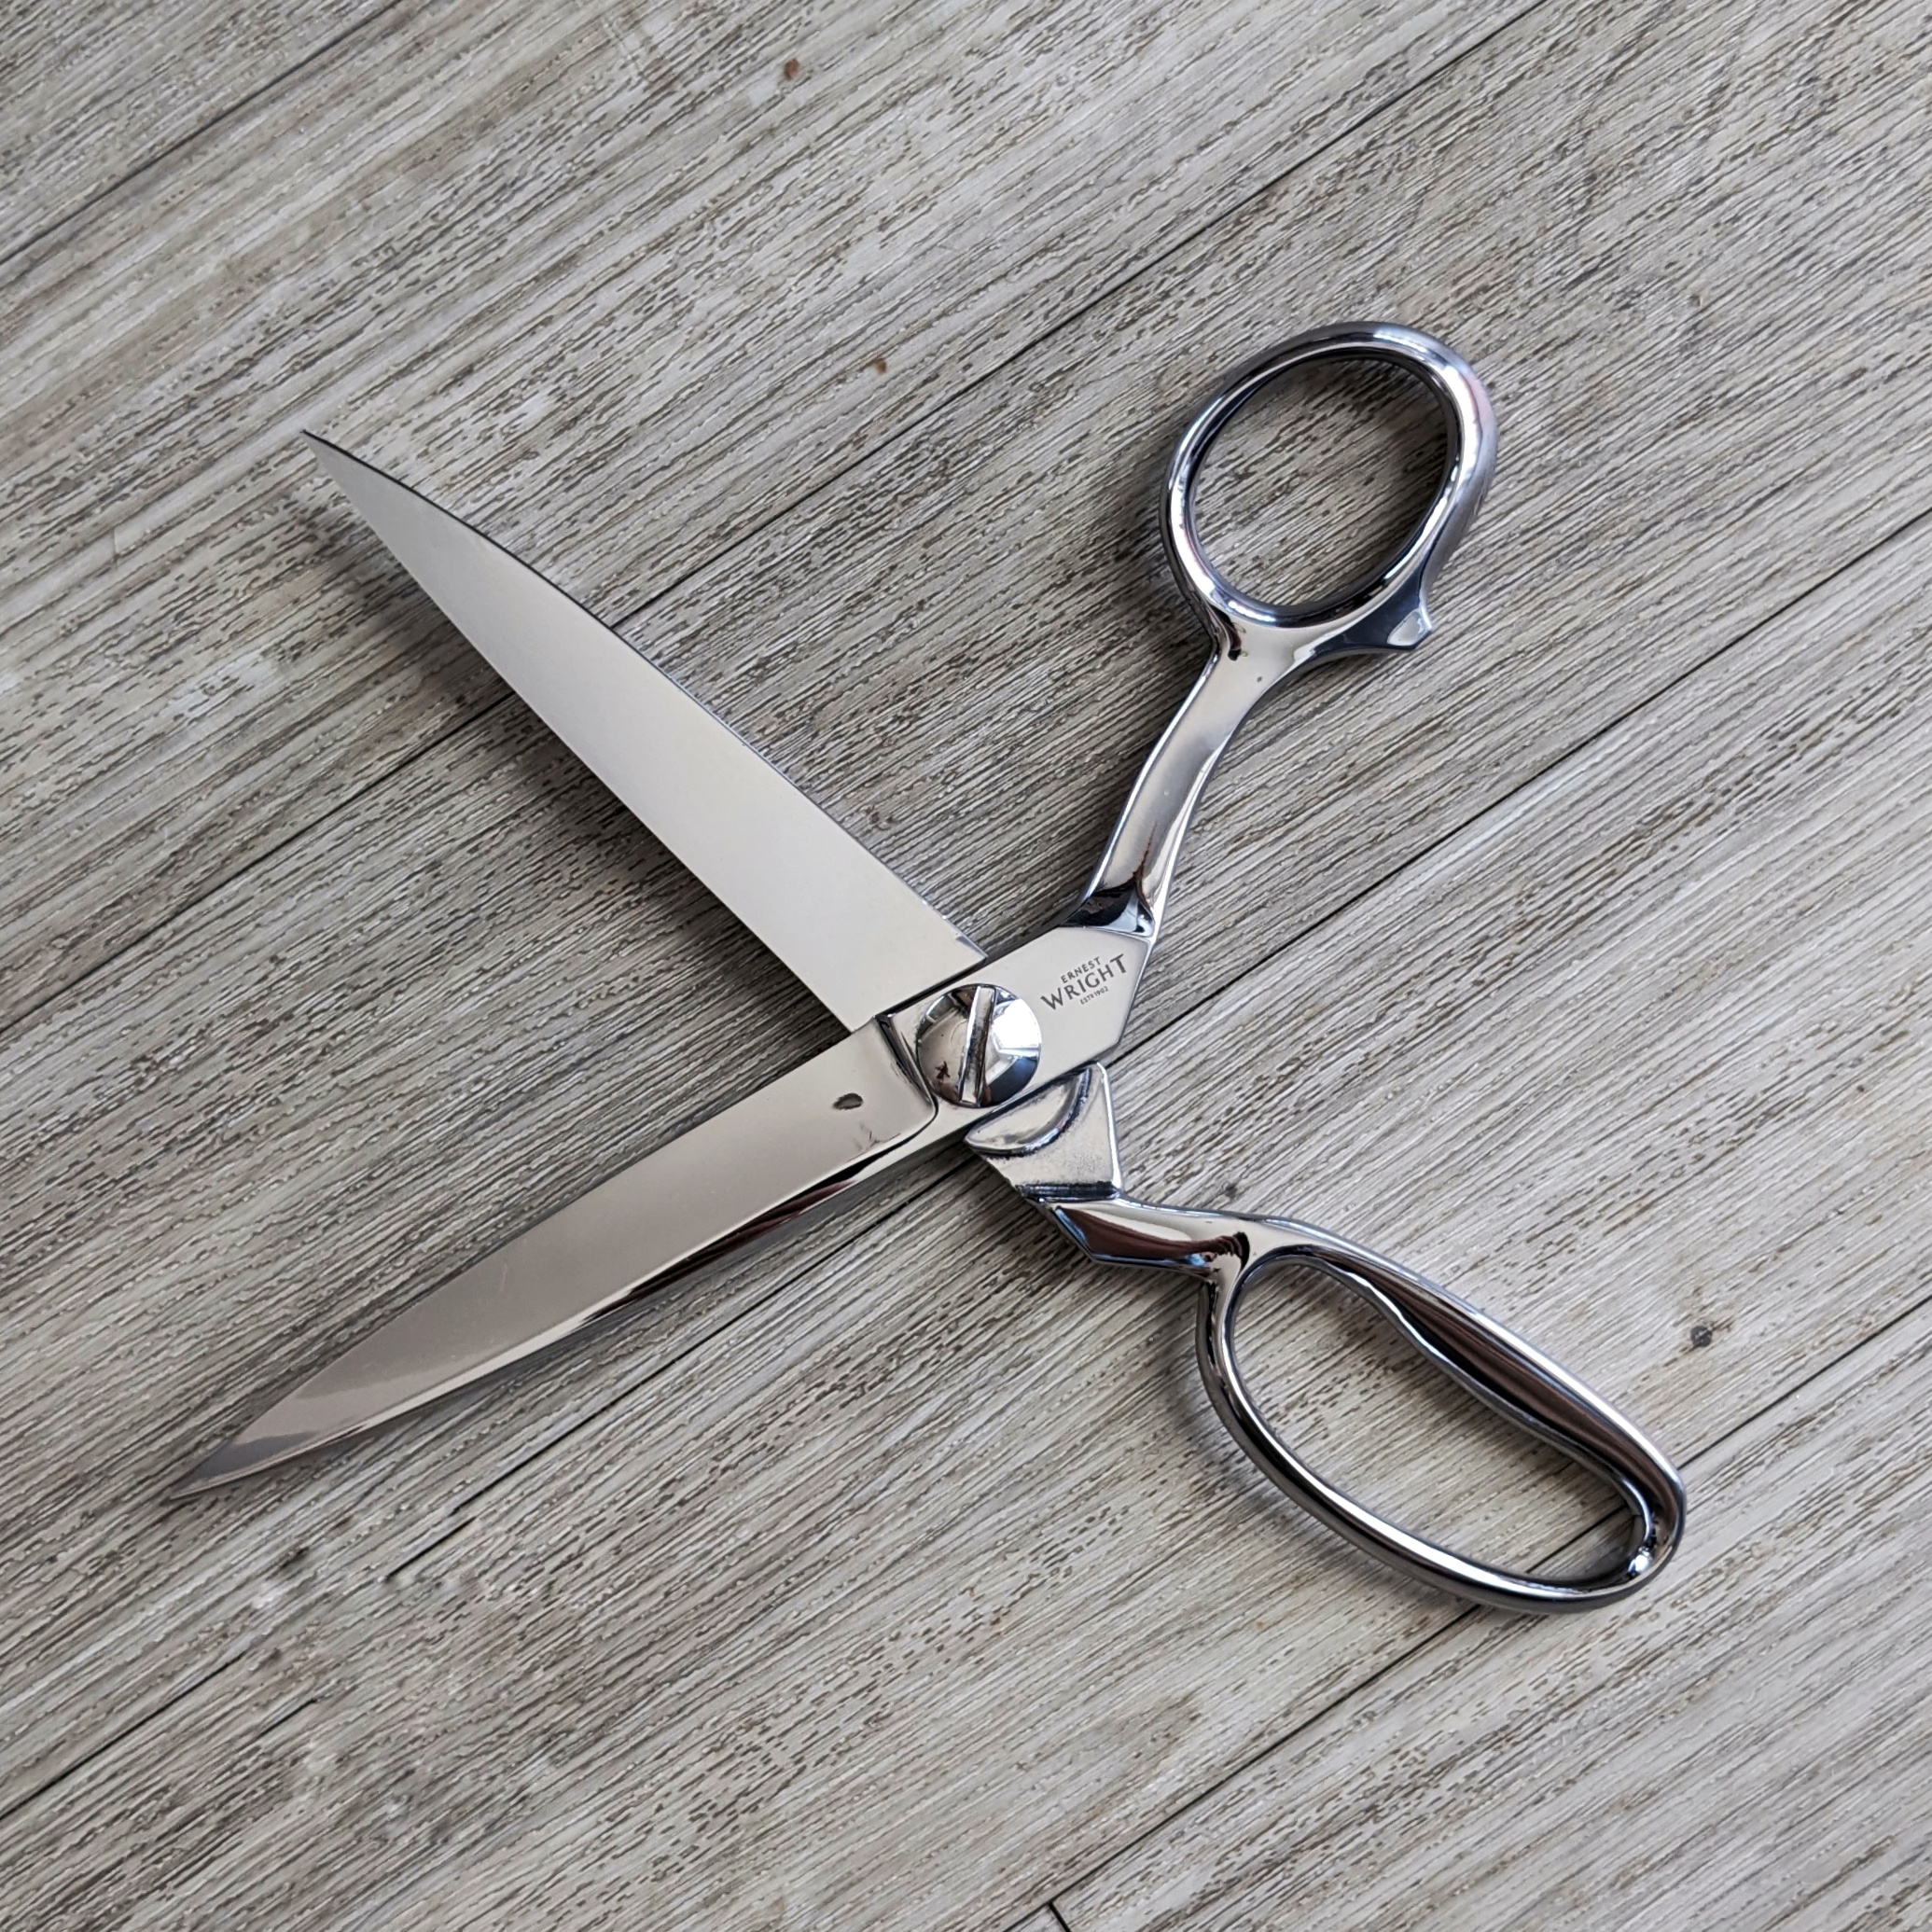 Ernest Wright Ltd.  Handmade scissors since 1902 Sheffield England